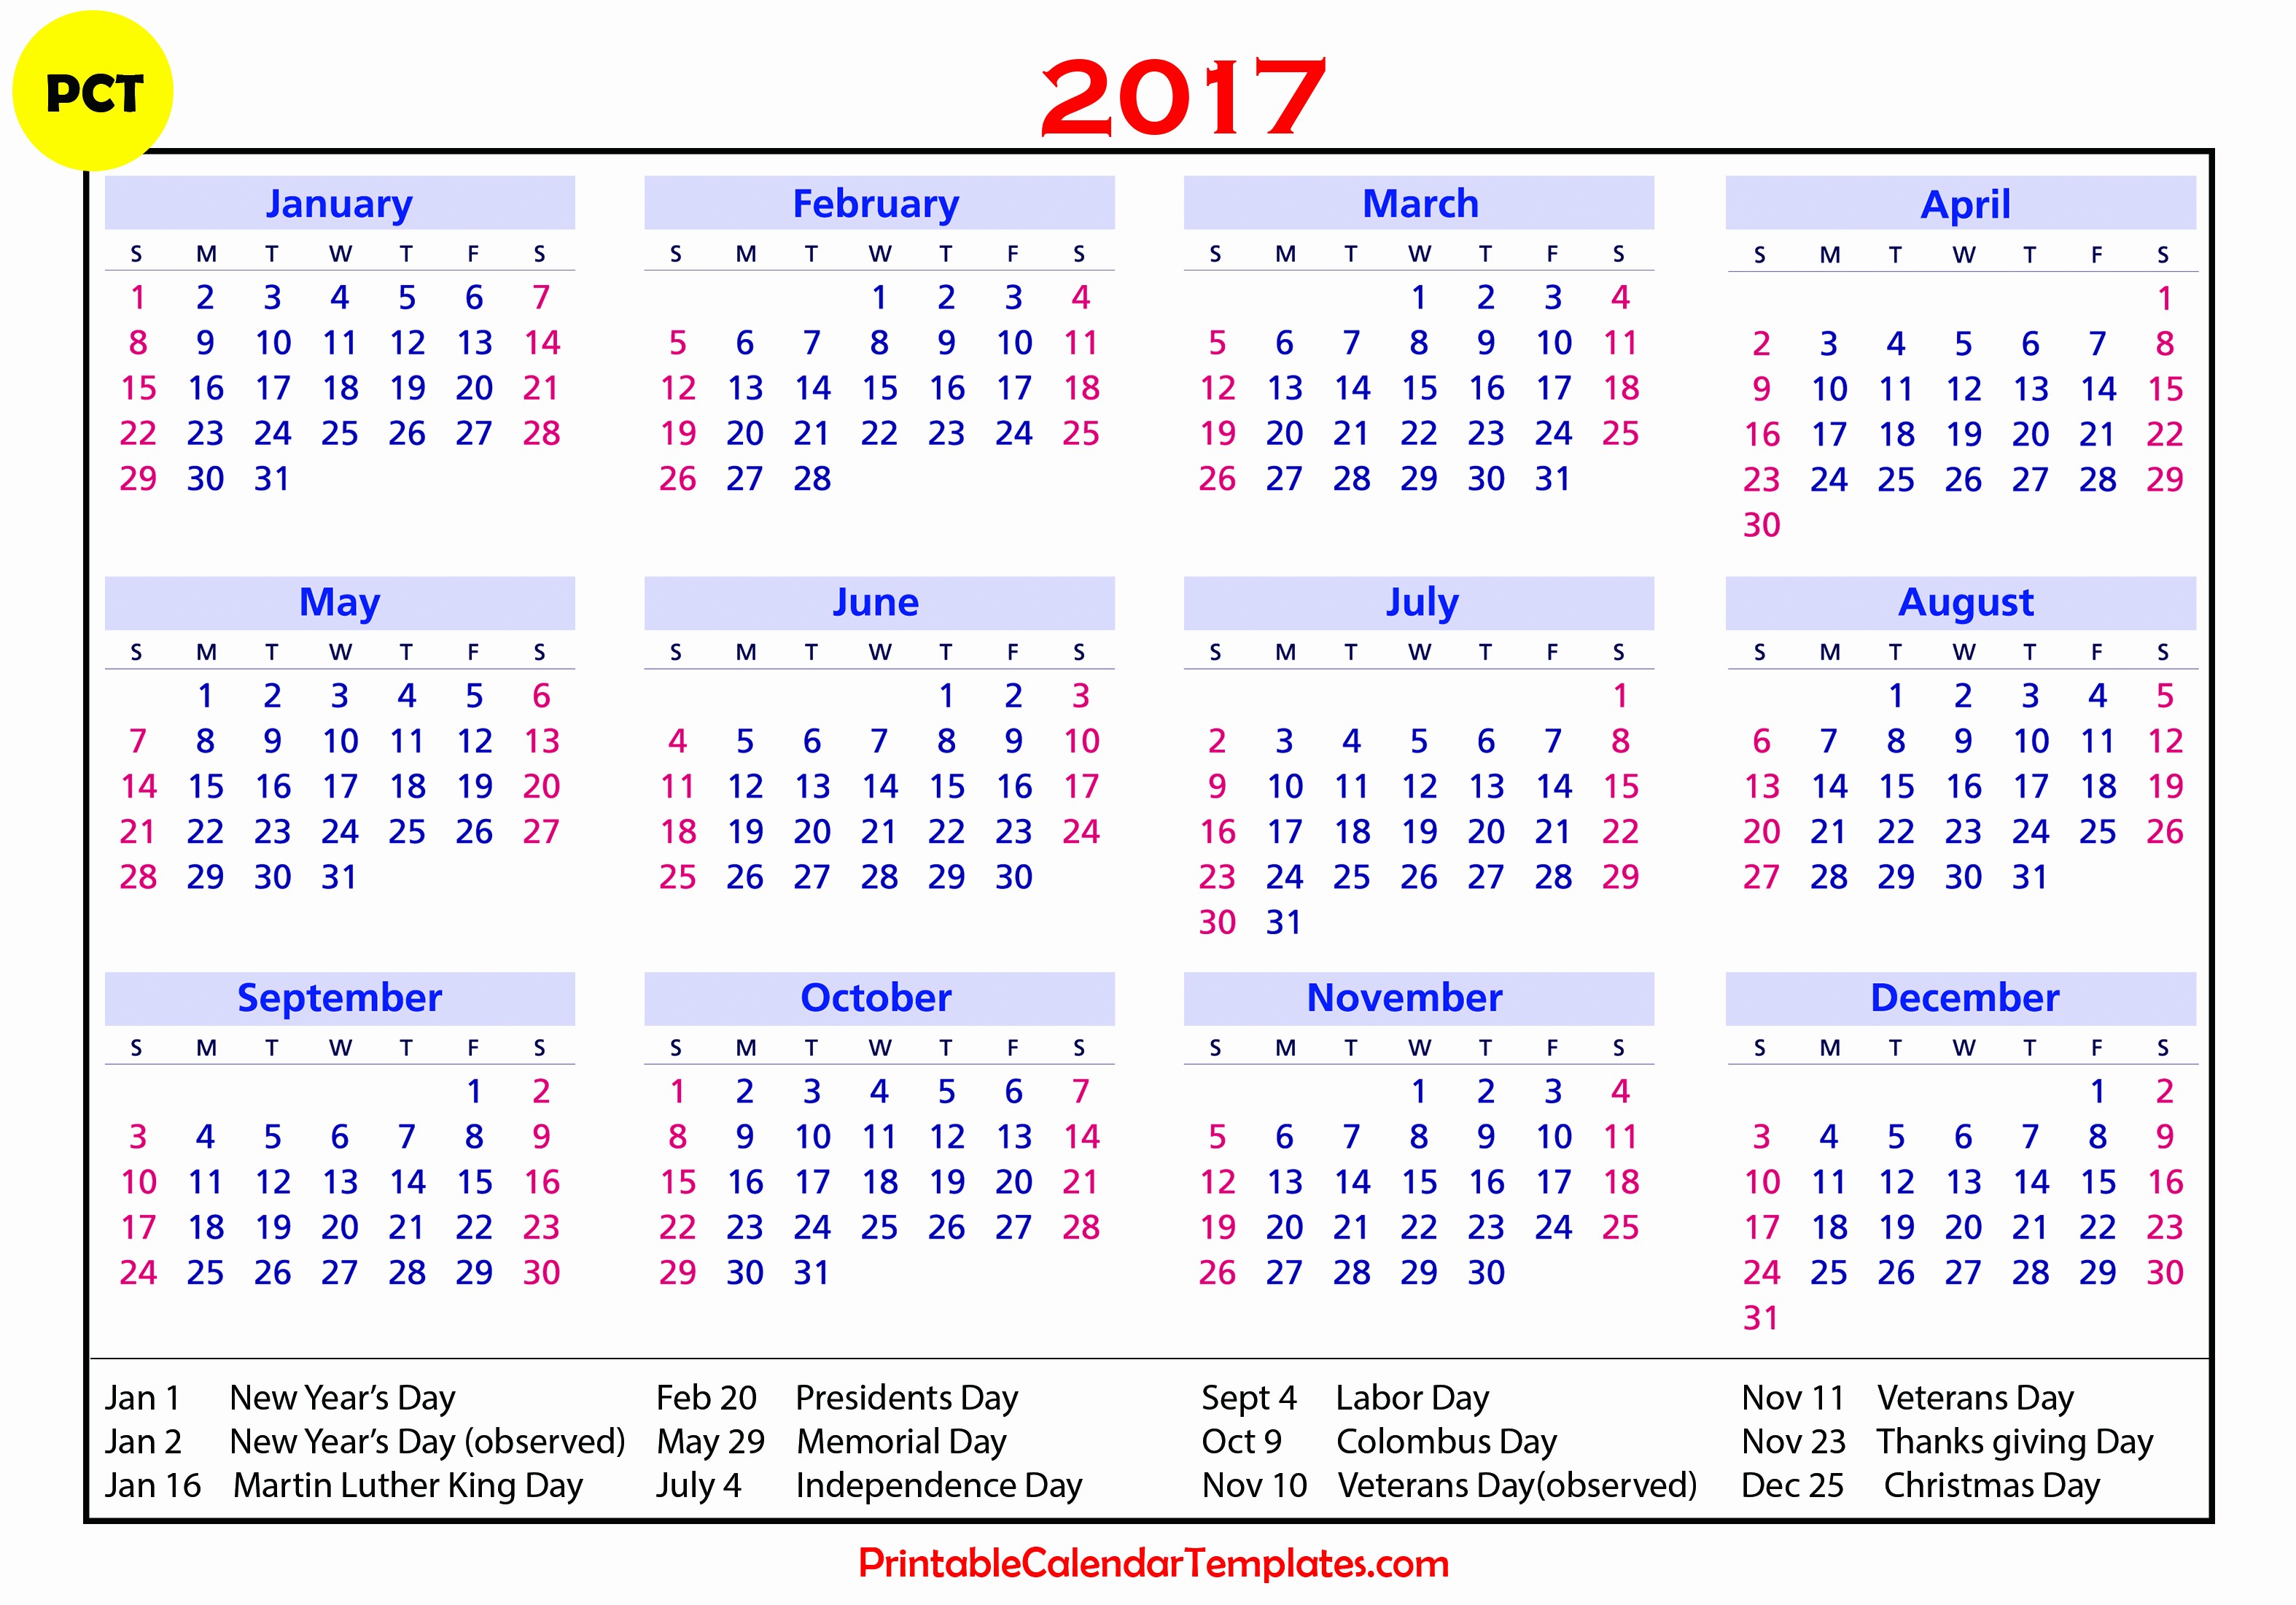 2017 Calendar with Holidays Template Elegant 2017 Calendar with Holidays